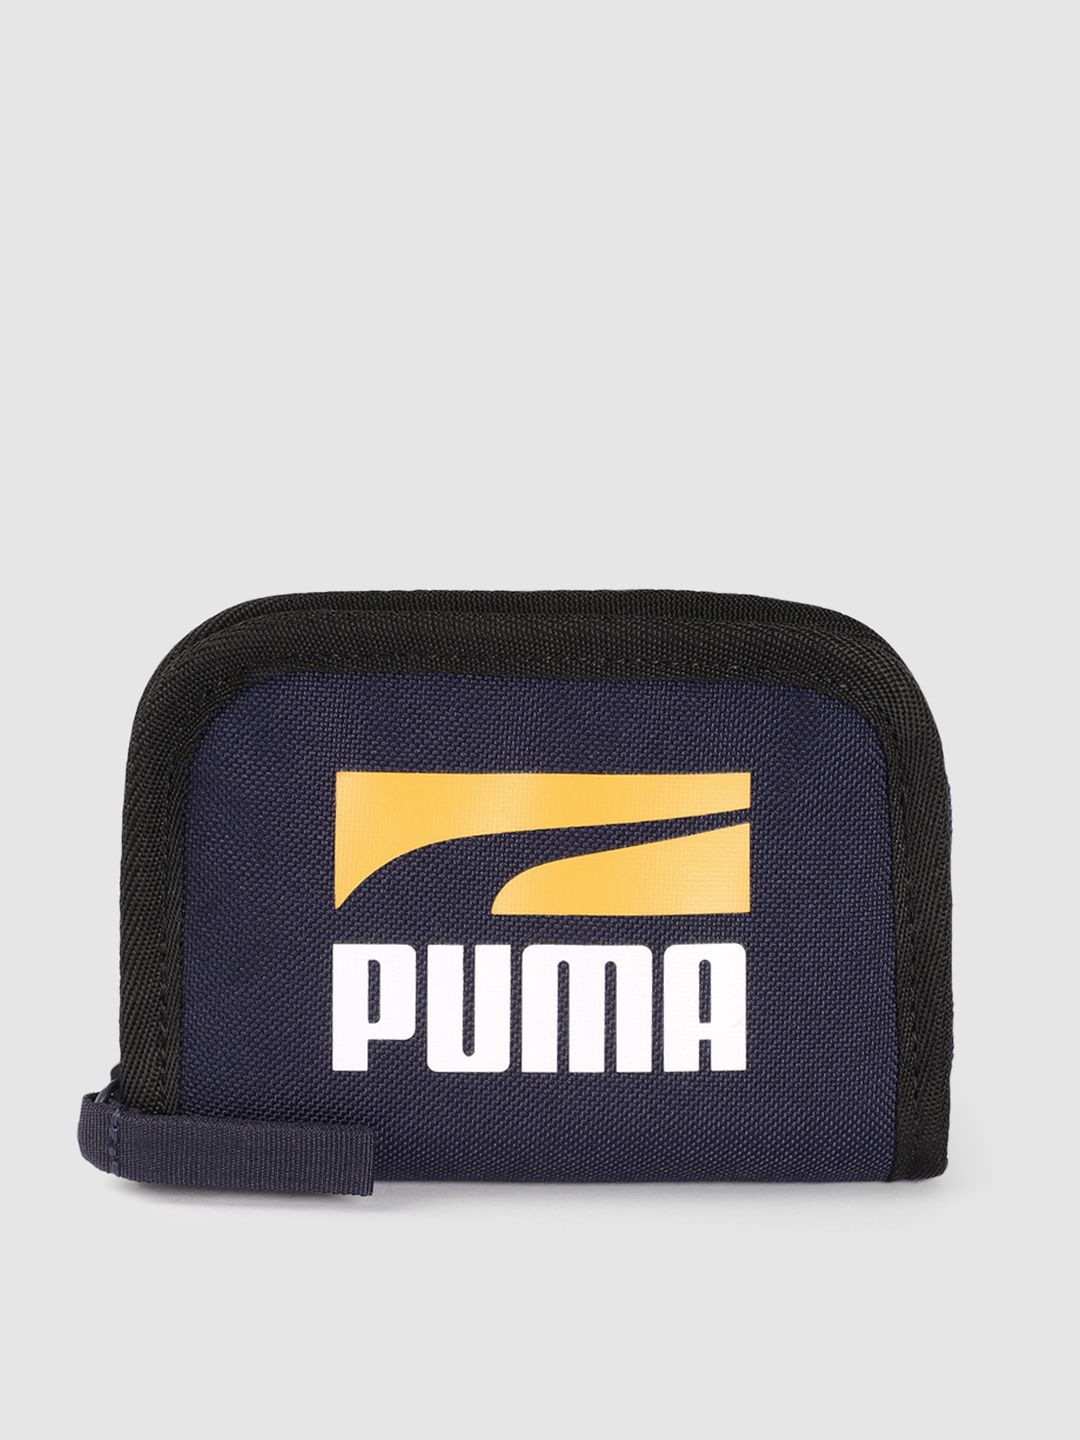 Puma Unisex Navy Blue Printed Zip Around Wallet Price in India